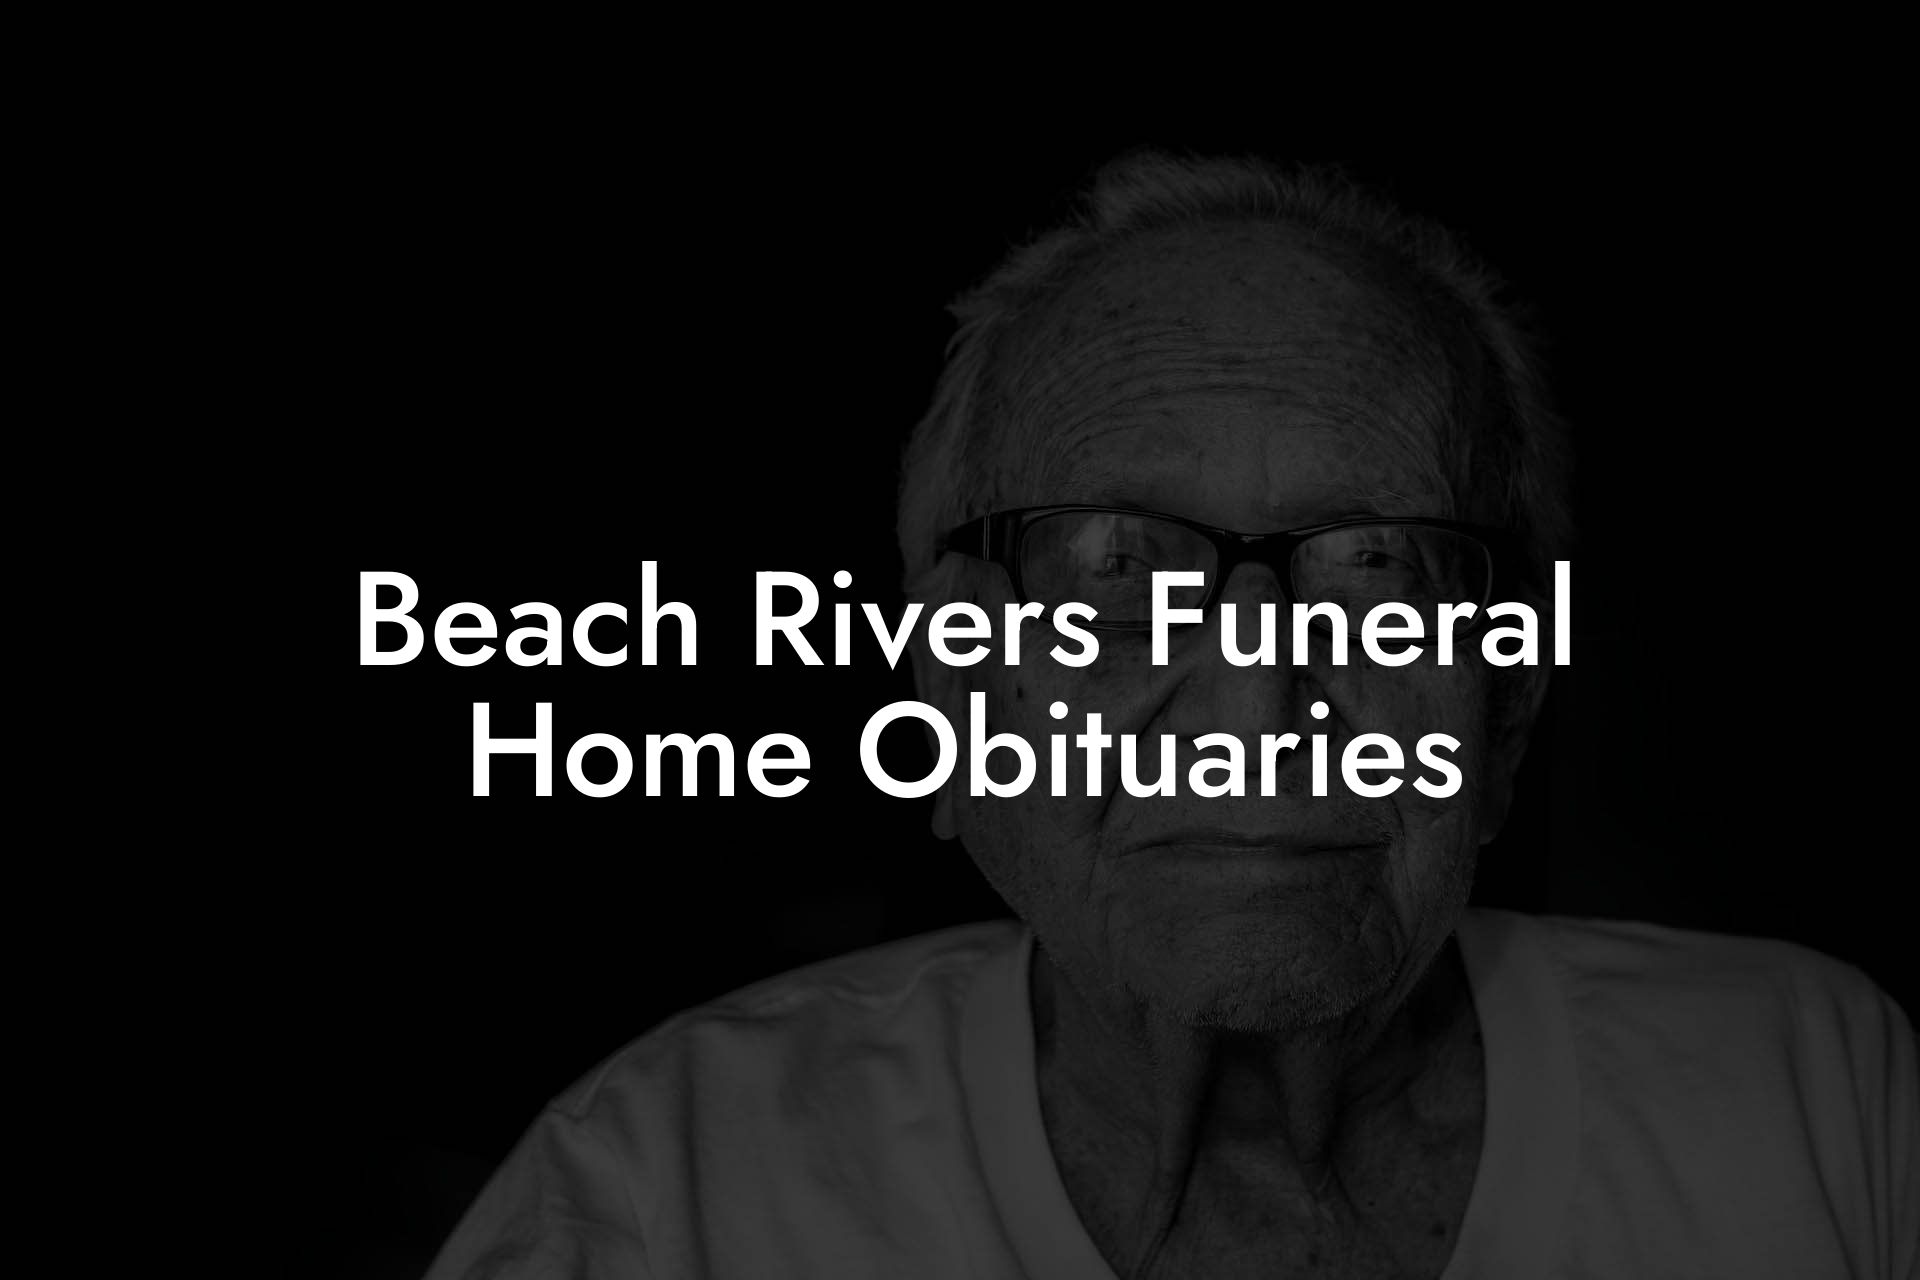 Beach Rivers Funeral Home Obituaries